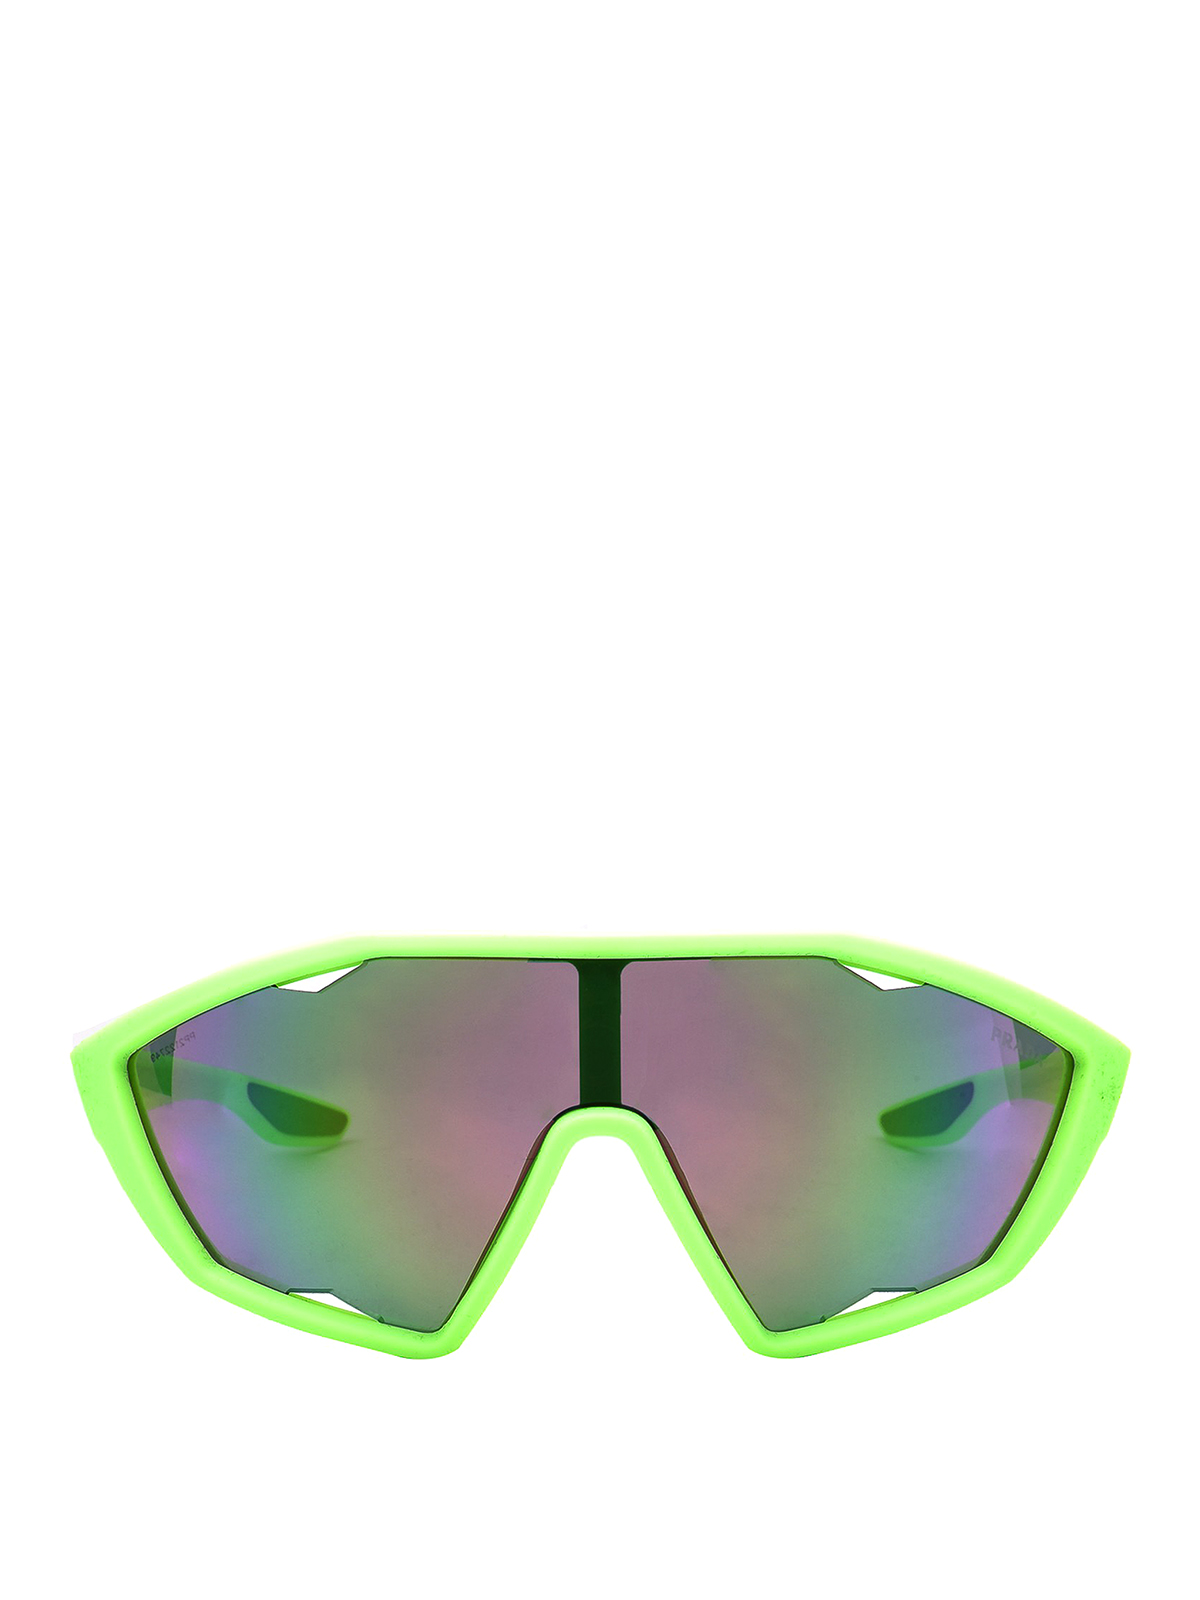 Prada - Neon green mask sunglasses with 